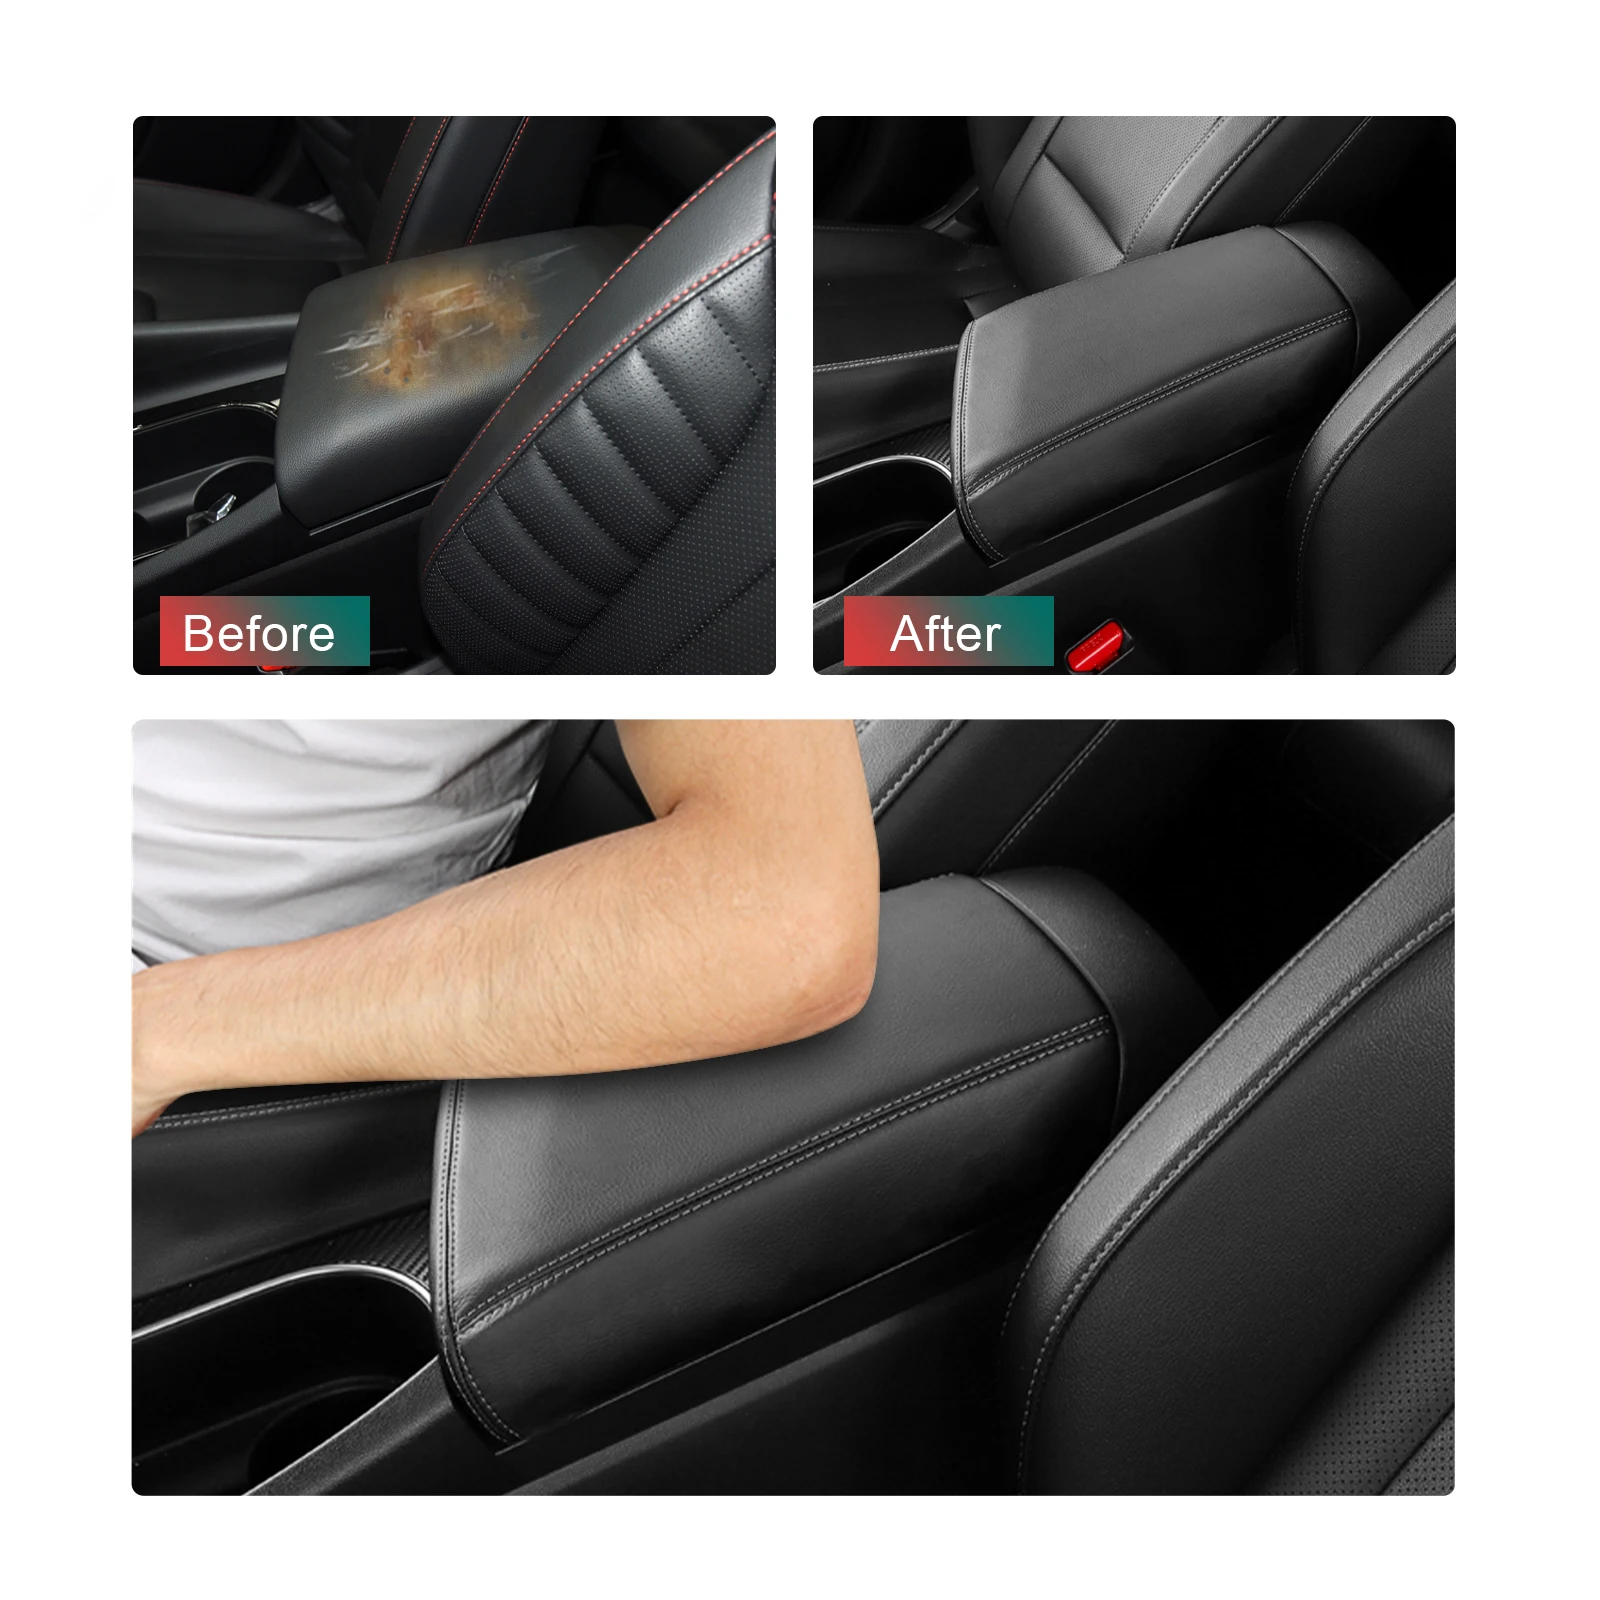 LFOTPP Car Armrest Box Cover For Avante CN7 2020/Elantra 2021 Central Control Armrest Container Pad Auto Interior Accessories